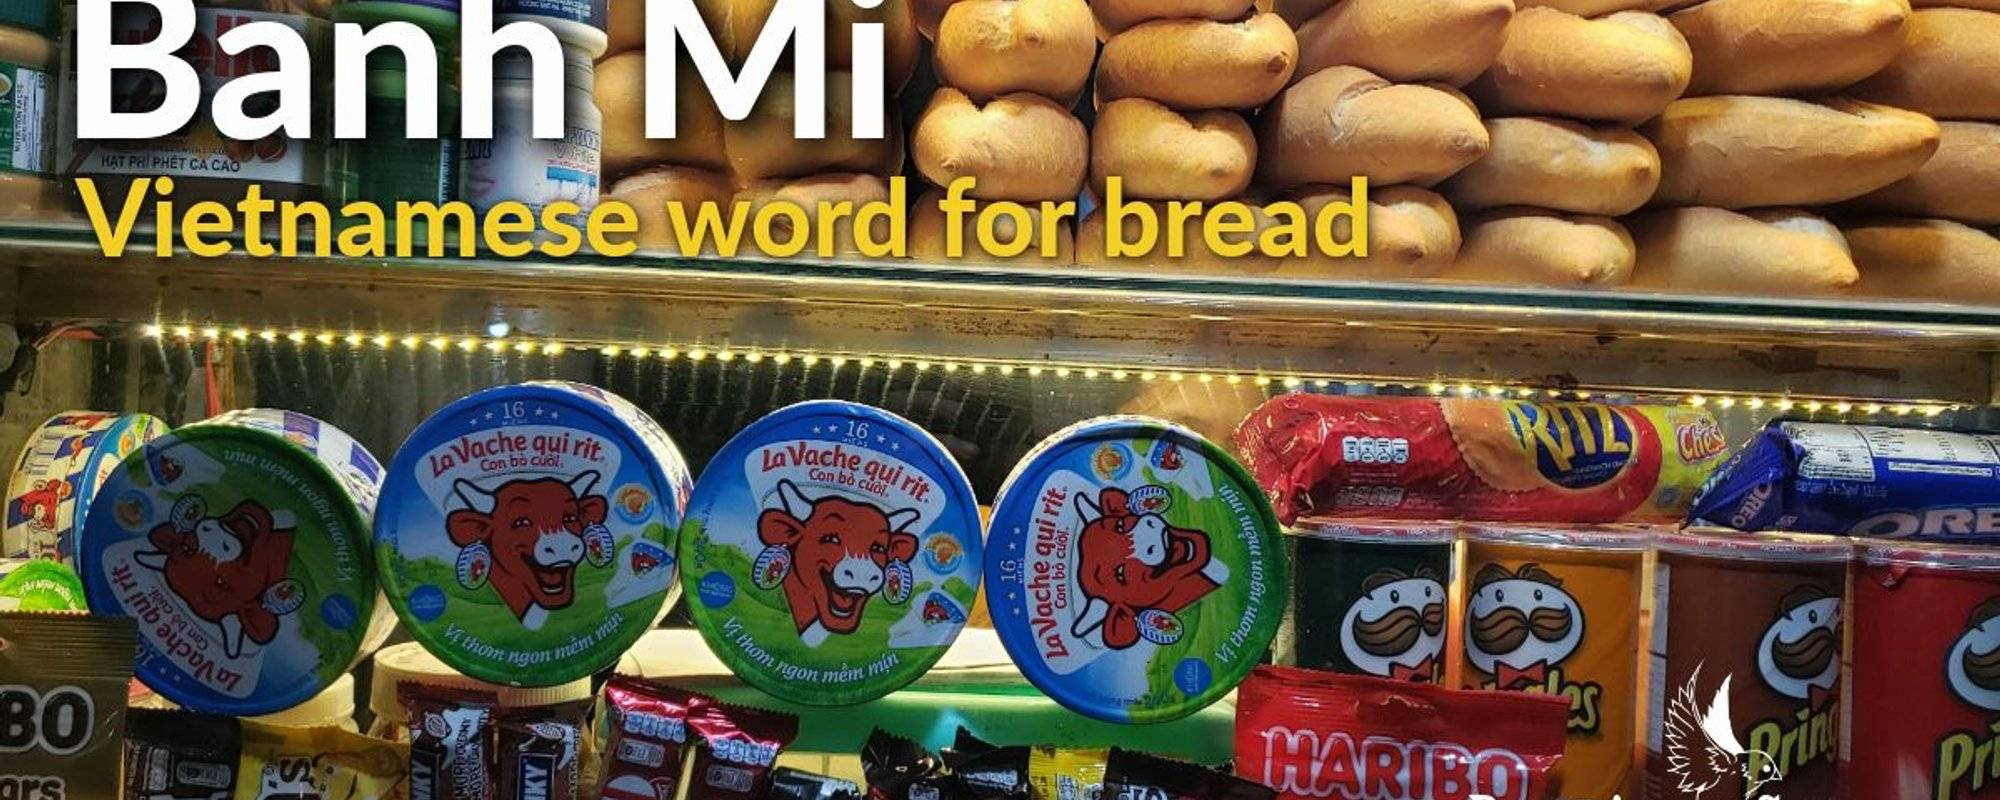 Banh Mi - Vietnamese word for bread.